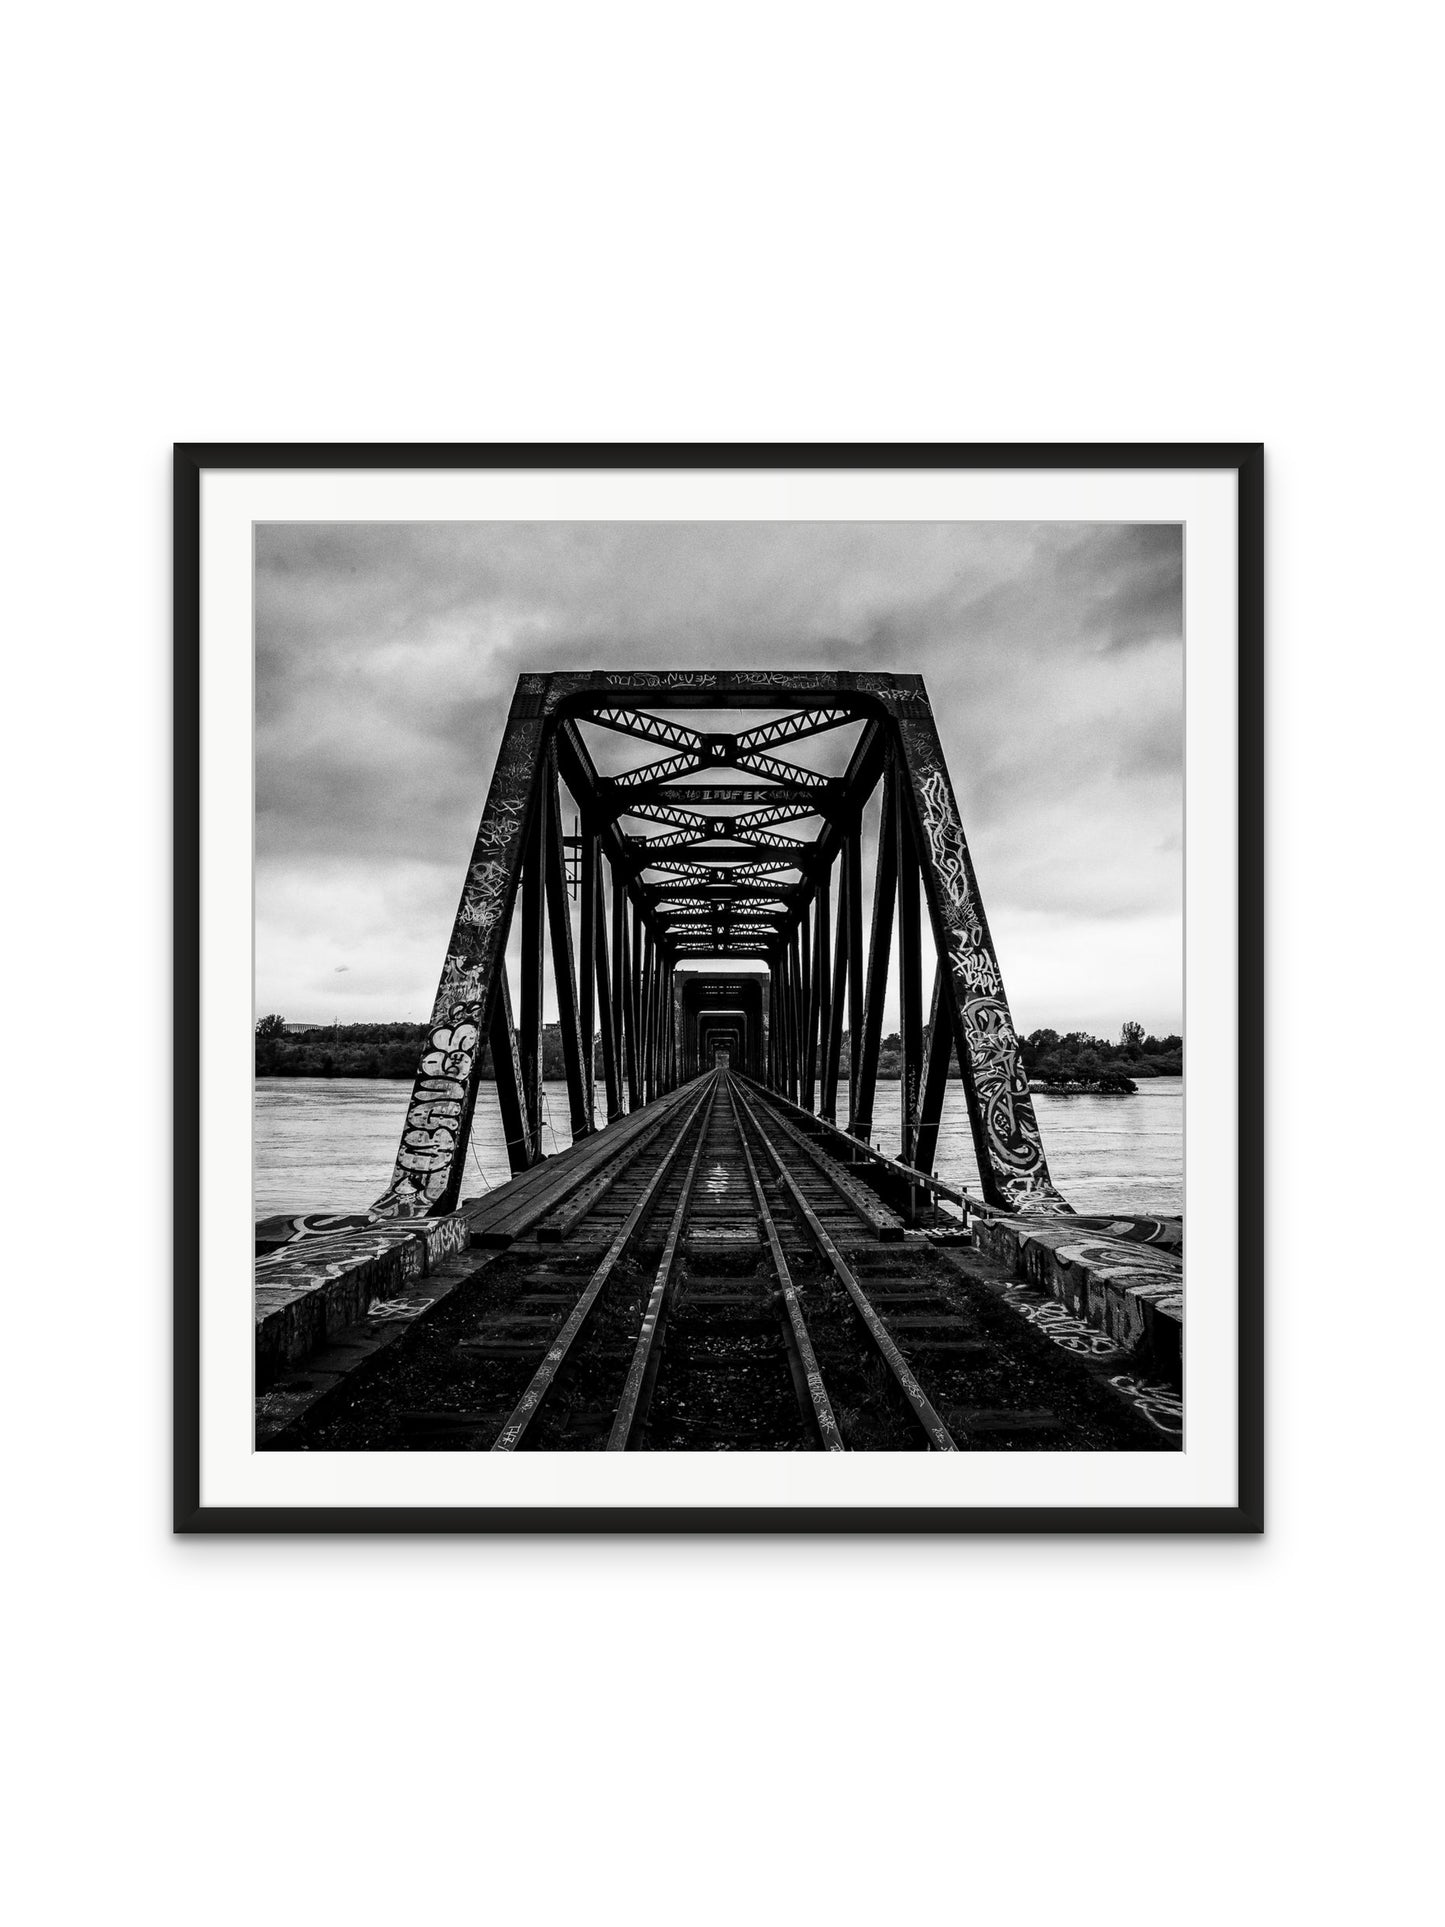 Railbridge